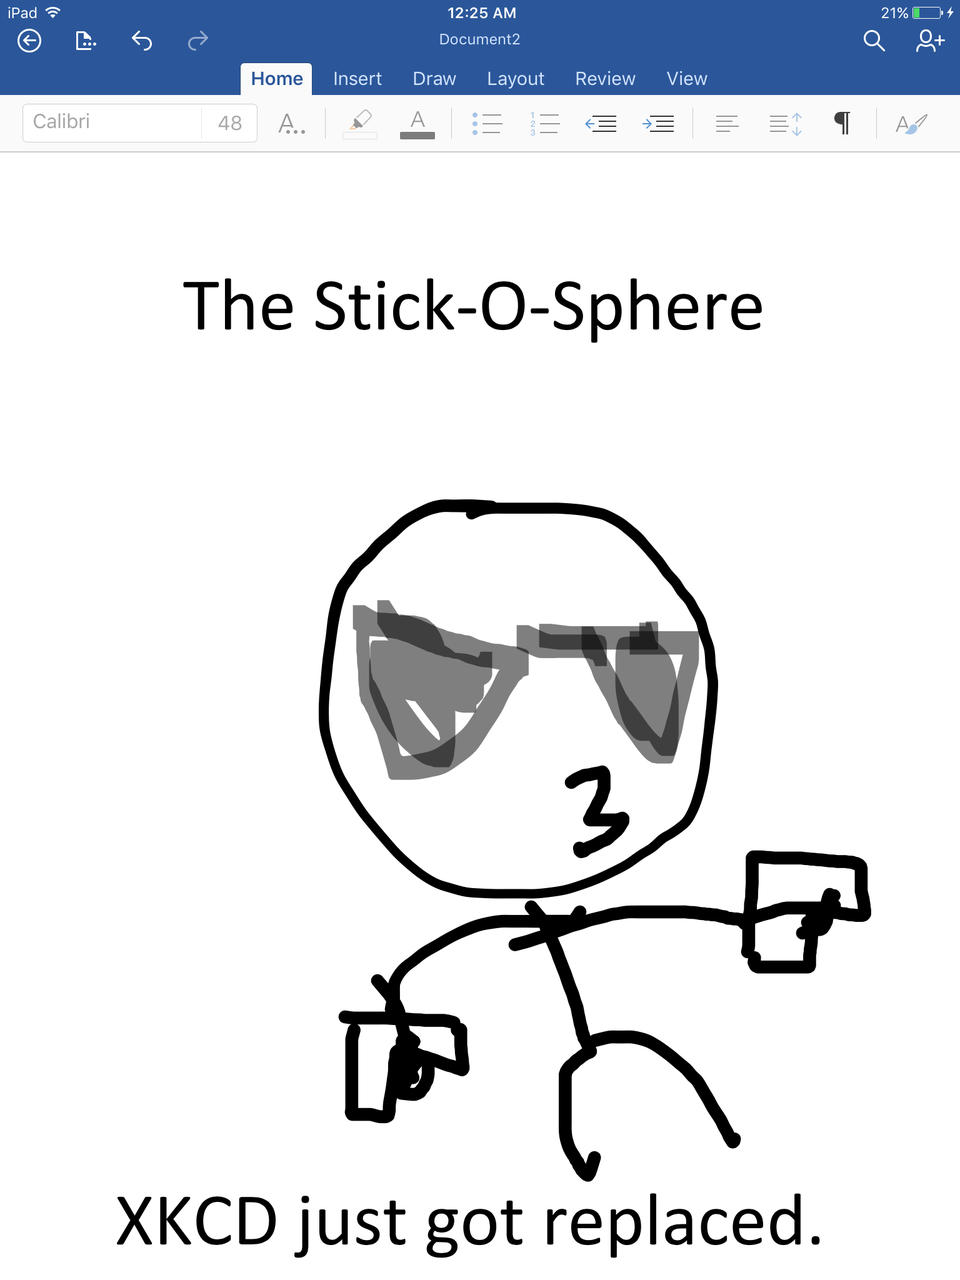 The stickosphere